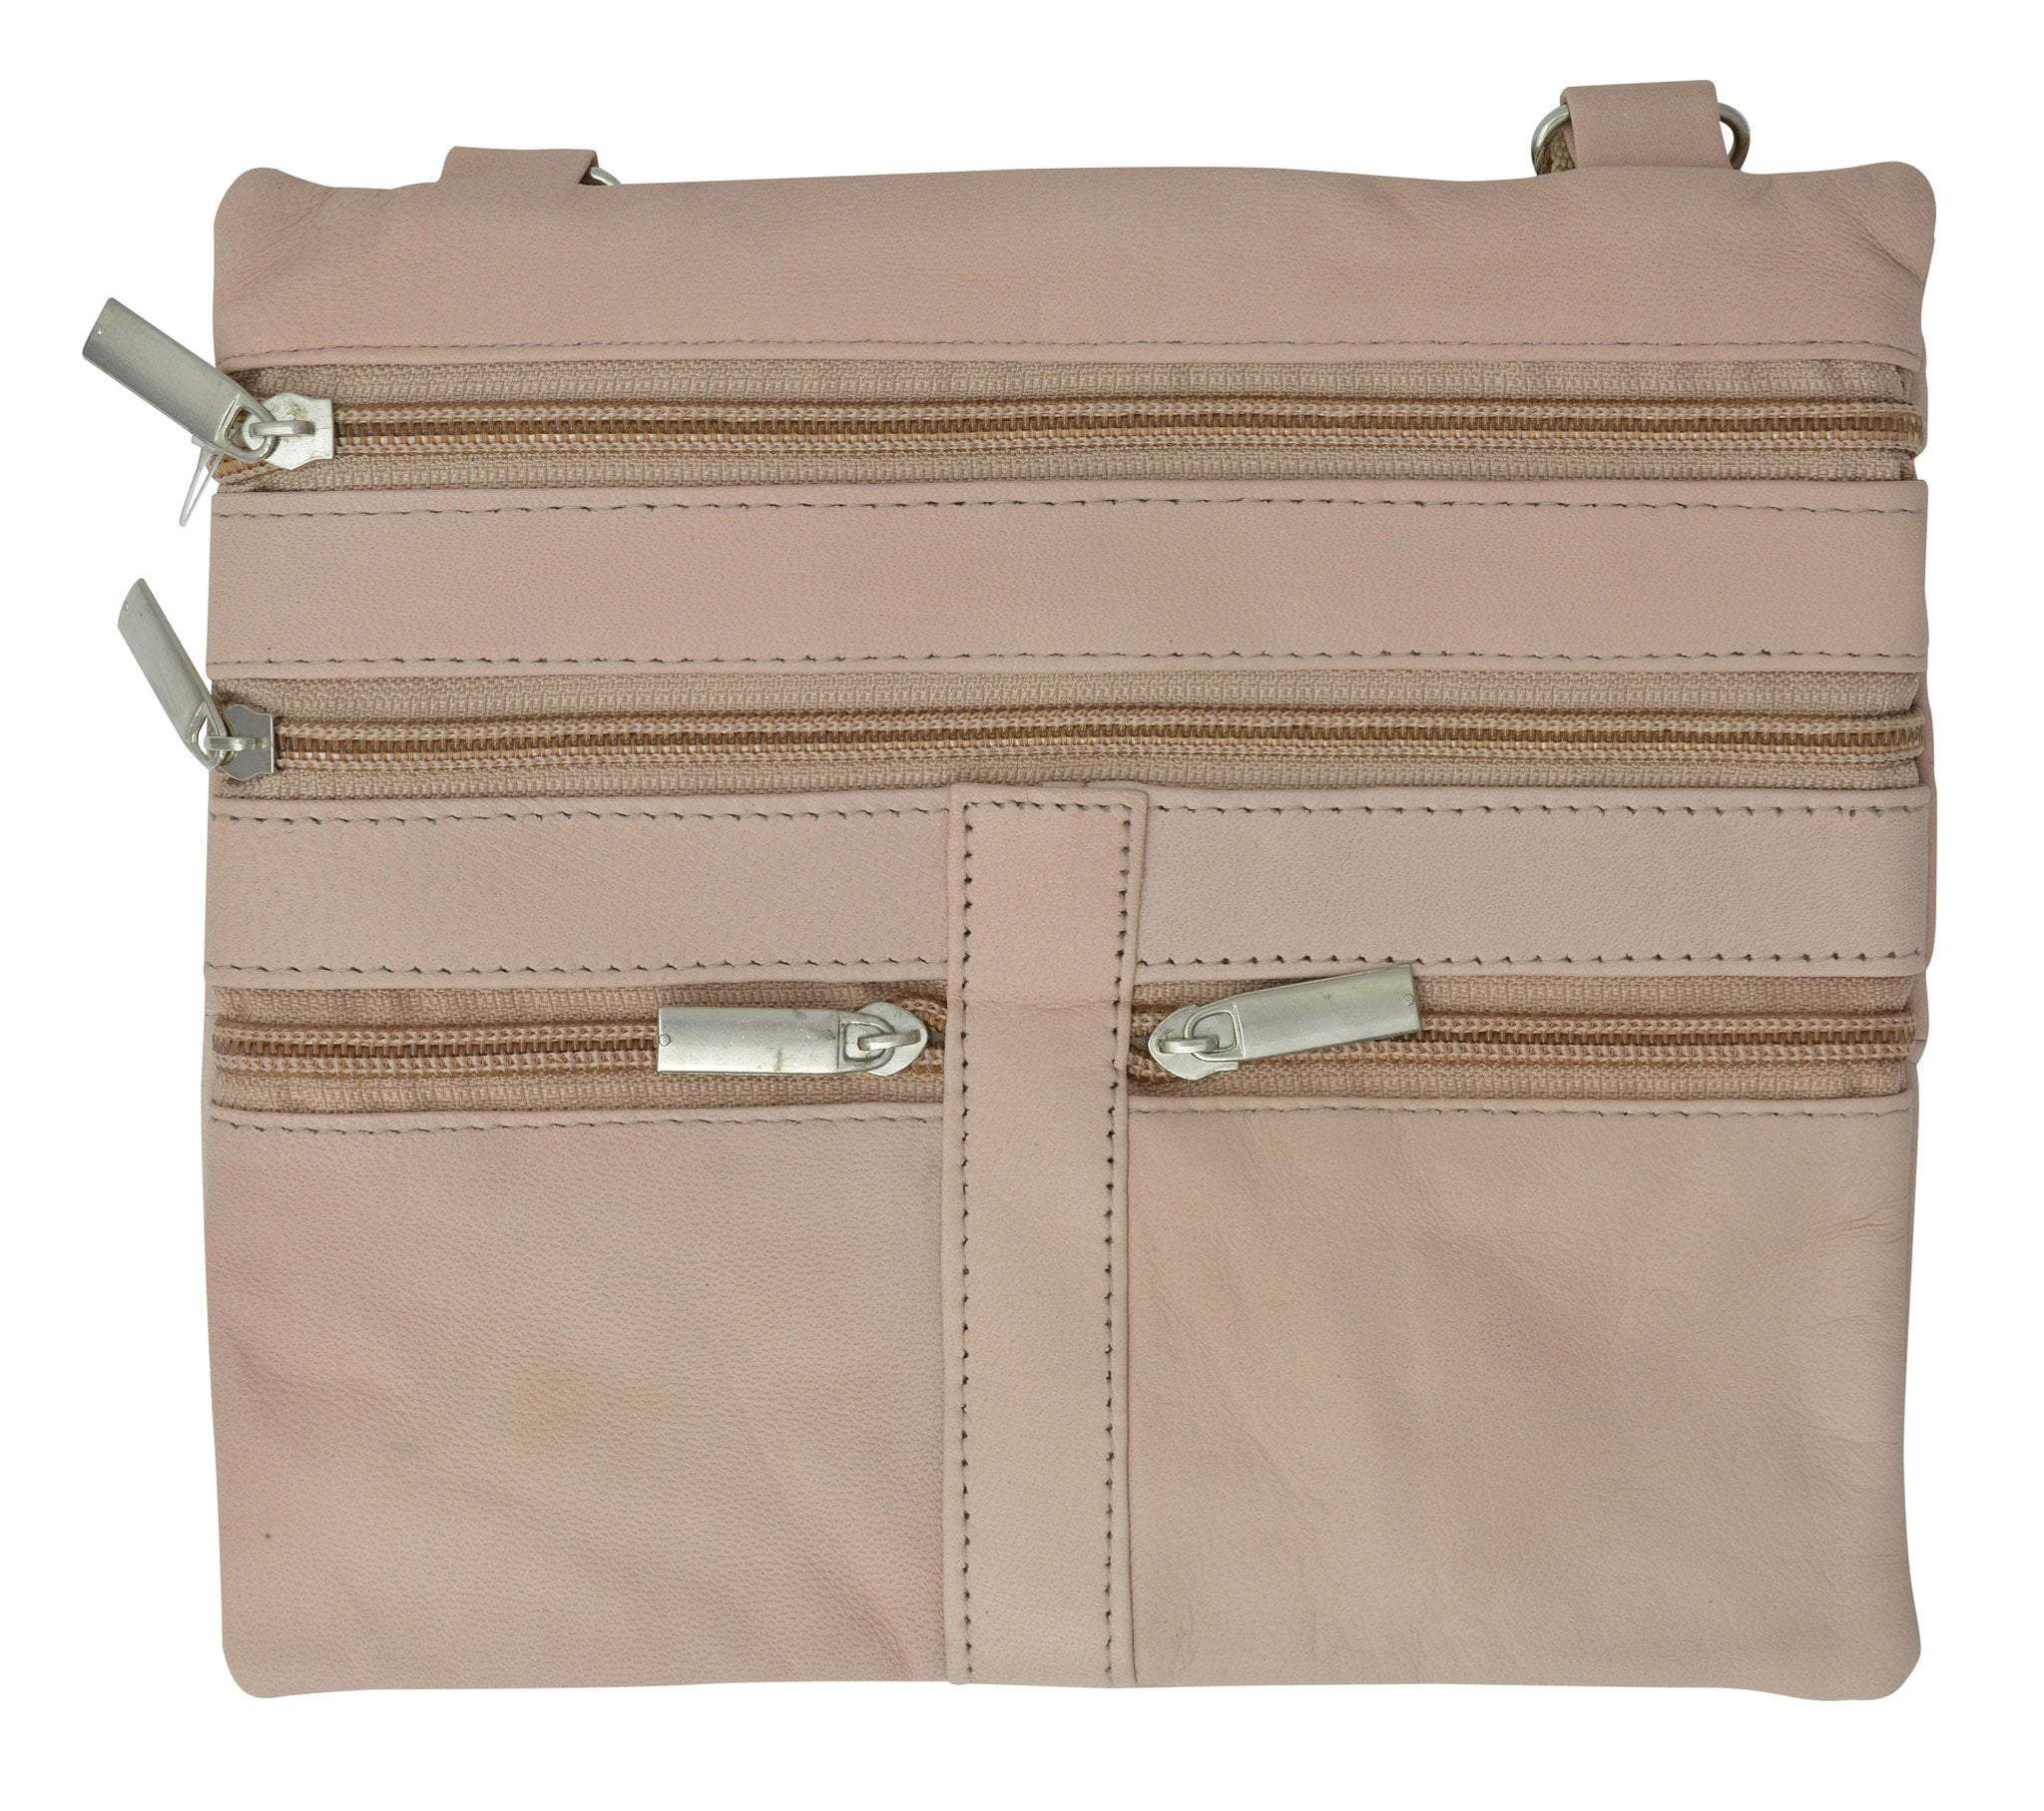 Marshal Wallet Genuine Soft Leather Cross Body Bag Purse Shoulder Bag 5 Pocket Organizer Micro Handbag Travel Wallet Many Colors, Women's, Size: Small